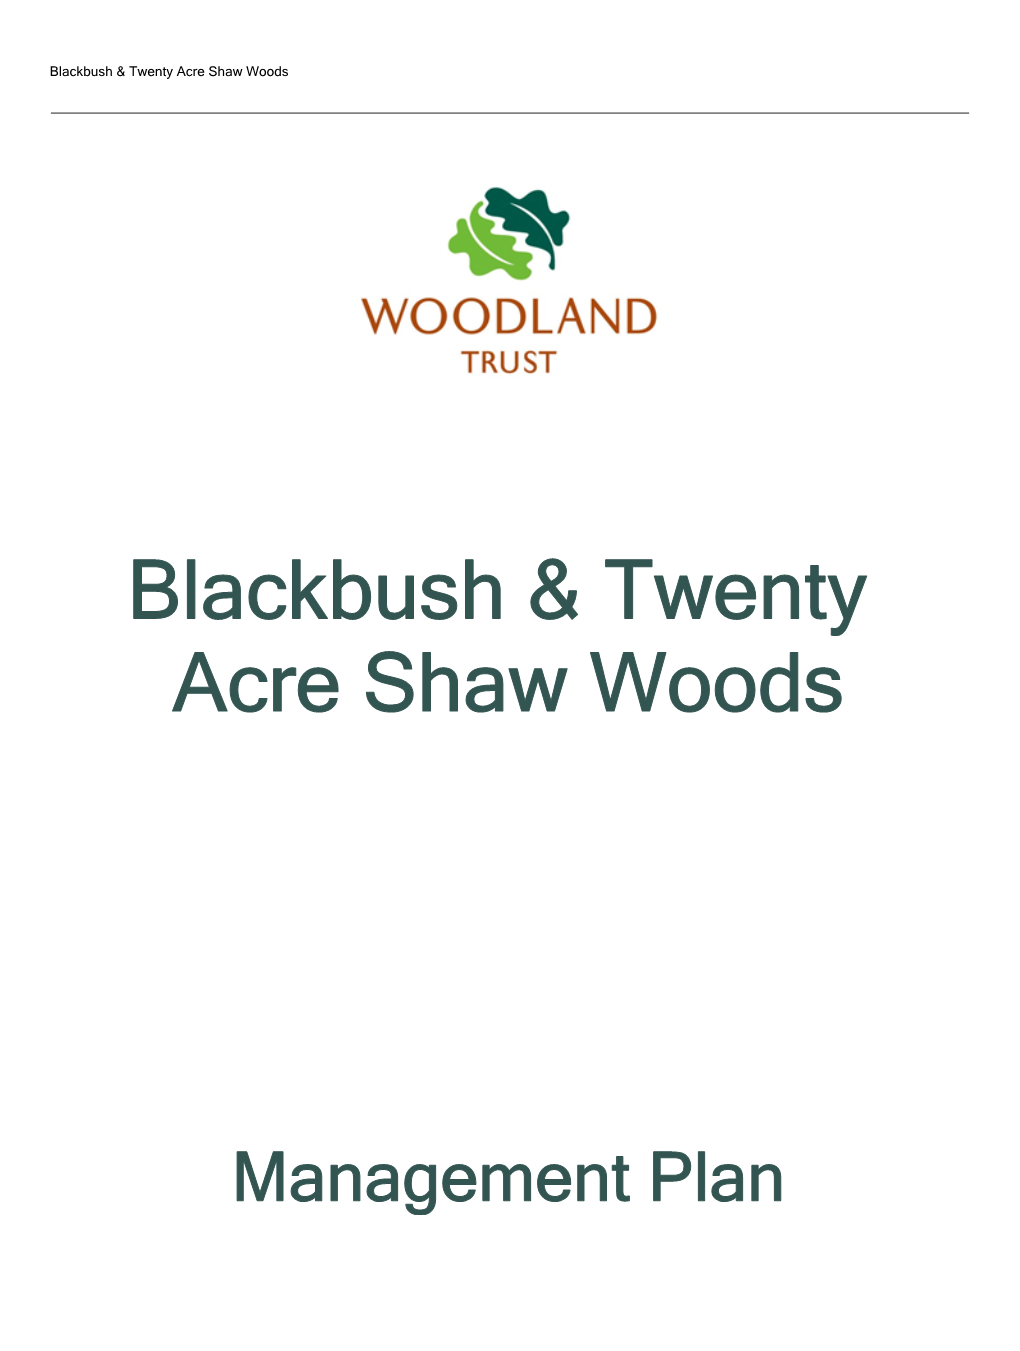 Download Blackbush & Twenty Acre Shaw Woods